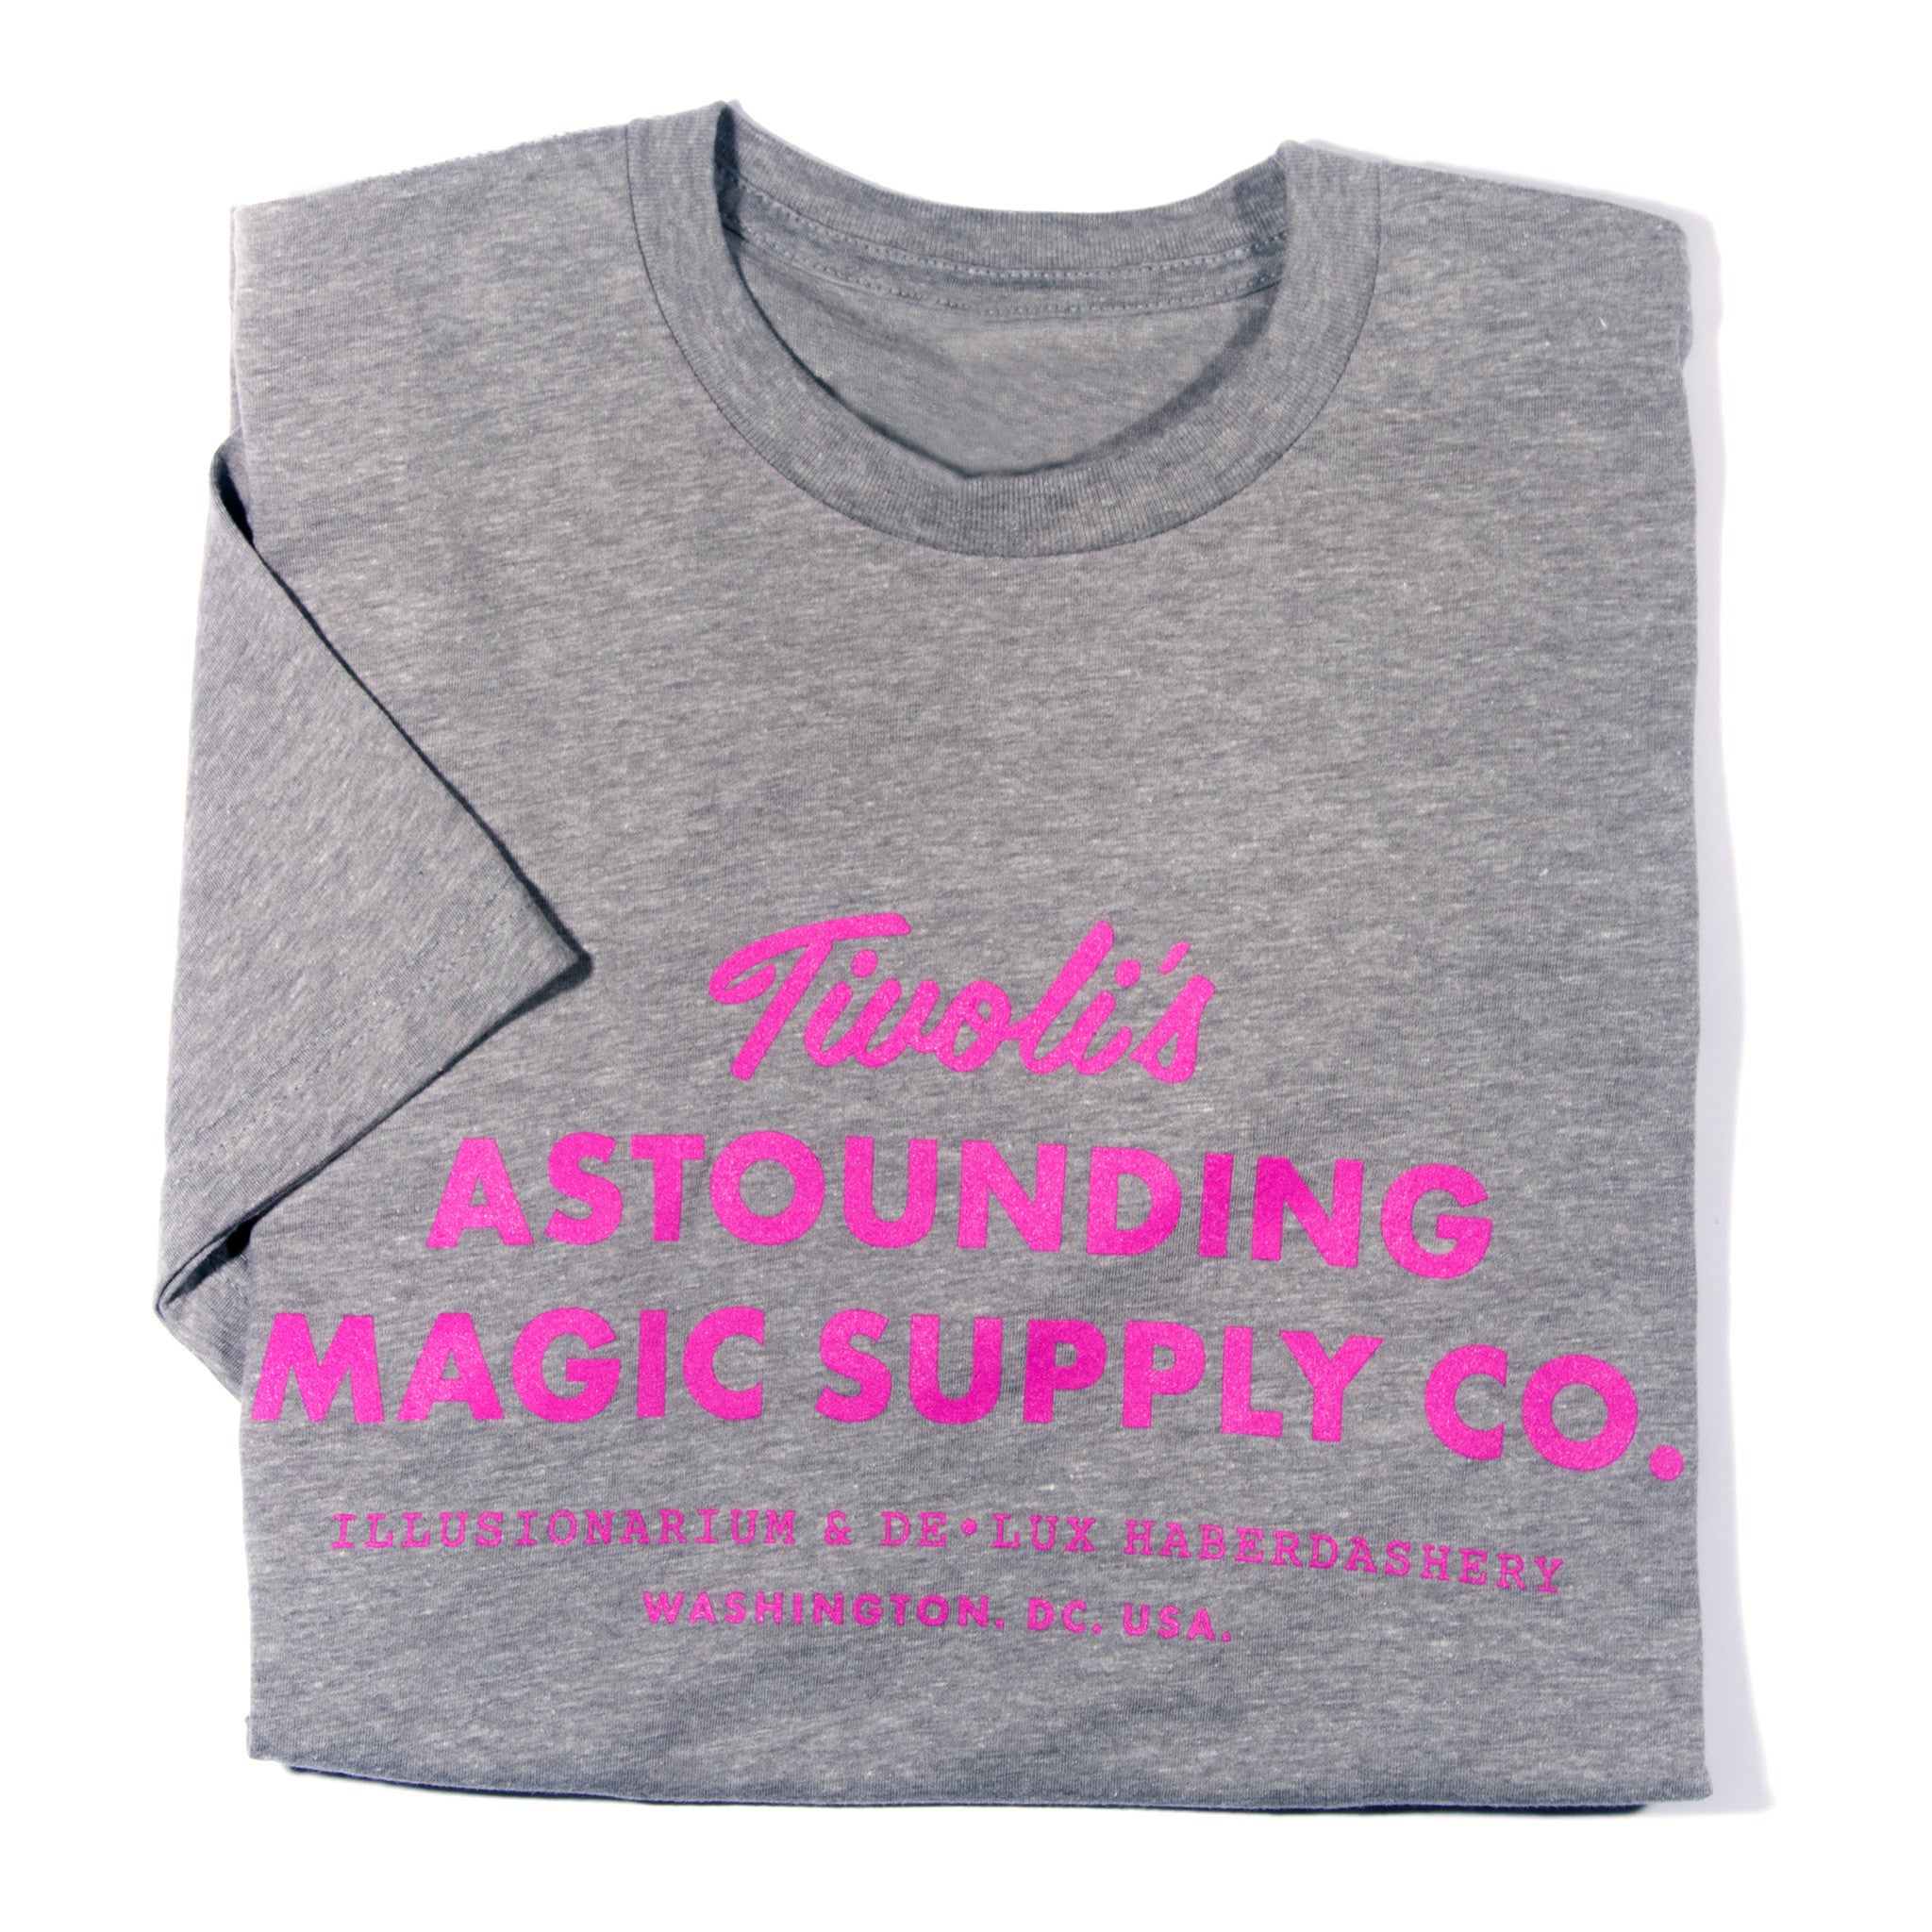 Grey shirt with Tivoli's Astounding Magic Supply Co. logo in pink.